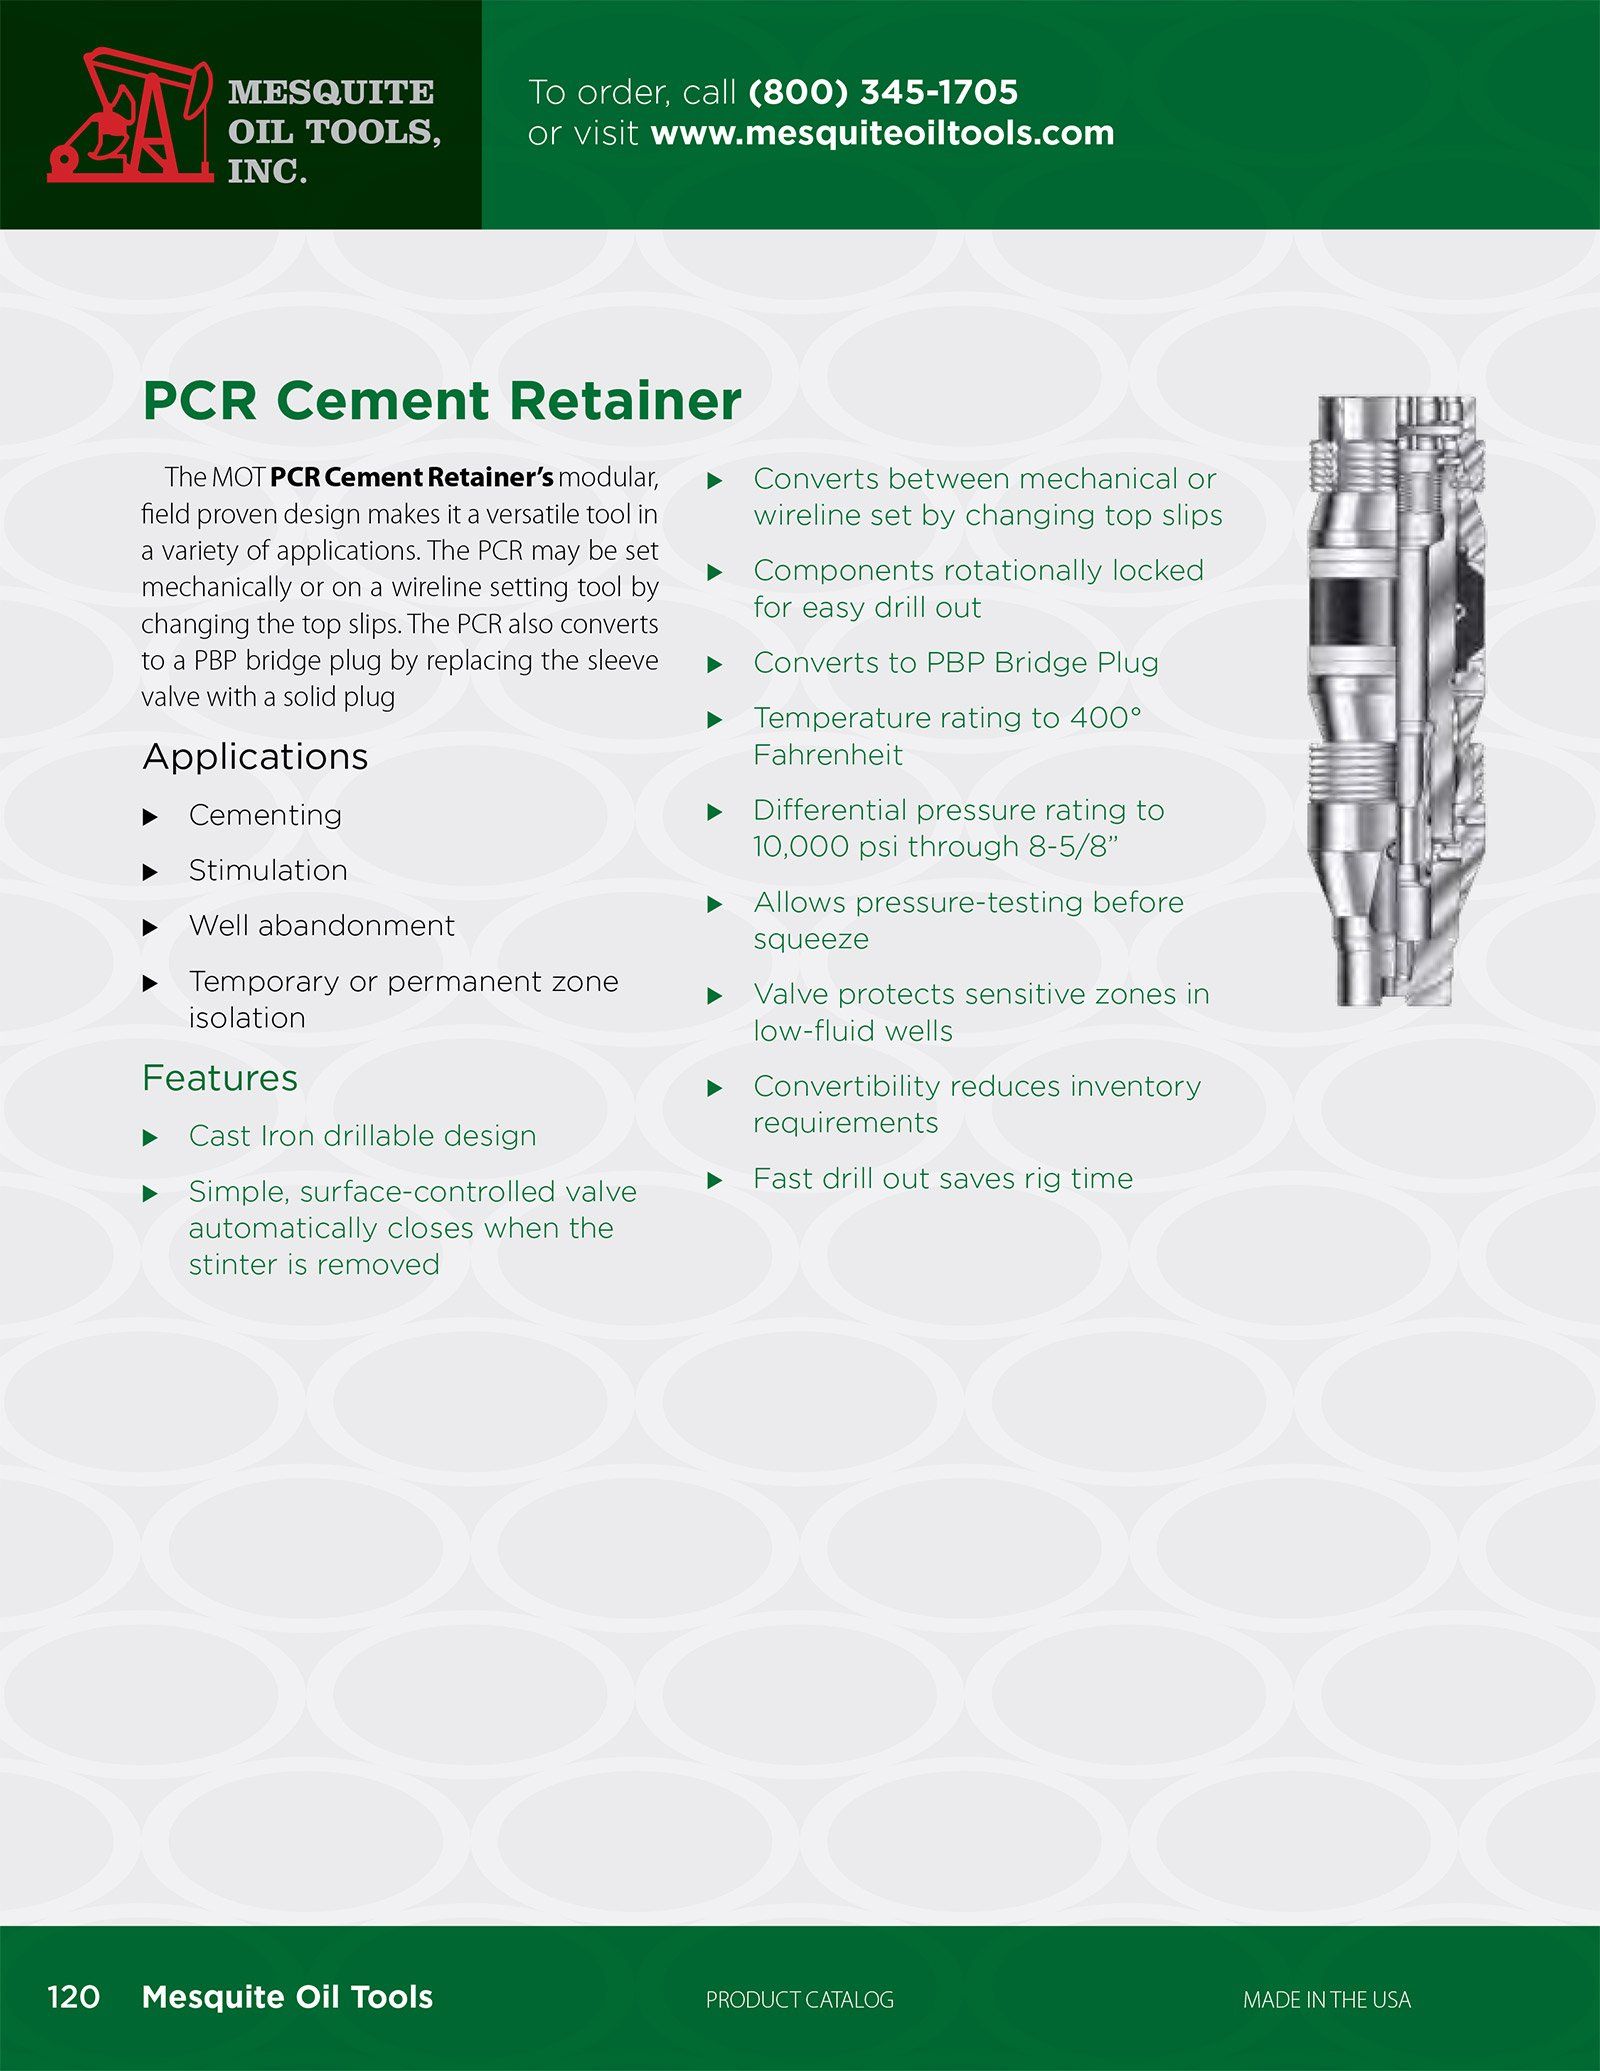 PCR Cement Retainer information